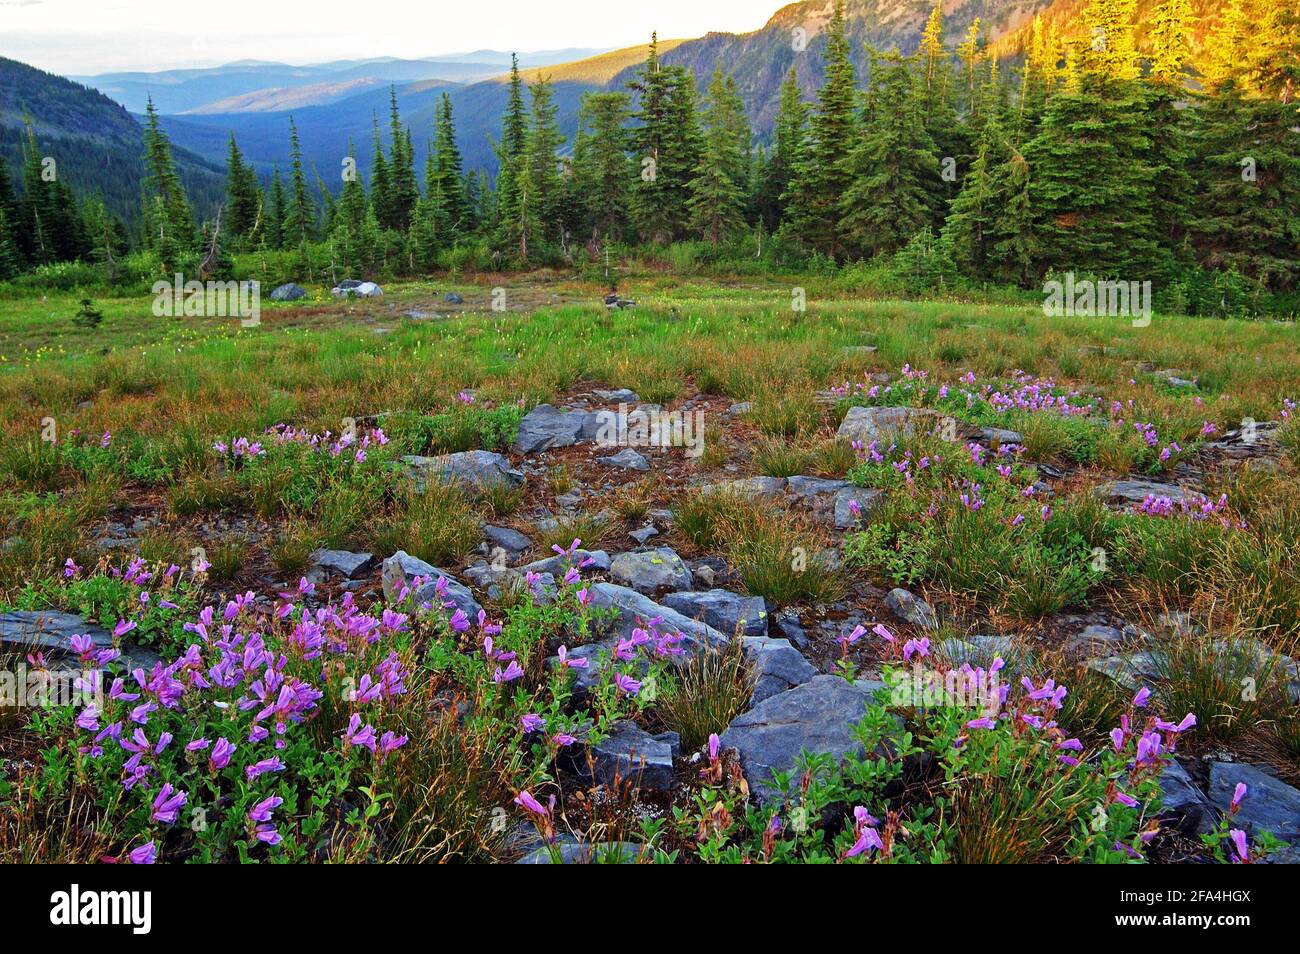 Northwest Peak Scenic Area. Kootenai National Forest in the Purcell Mountains, northwest Montana. (Photo by Randy Beacham) Stock Photo